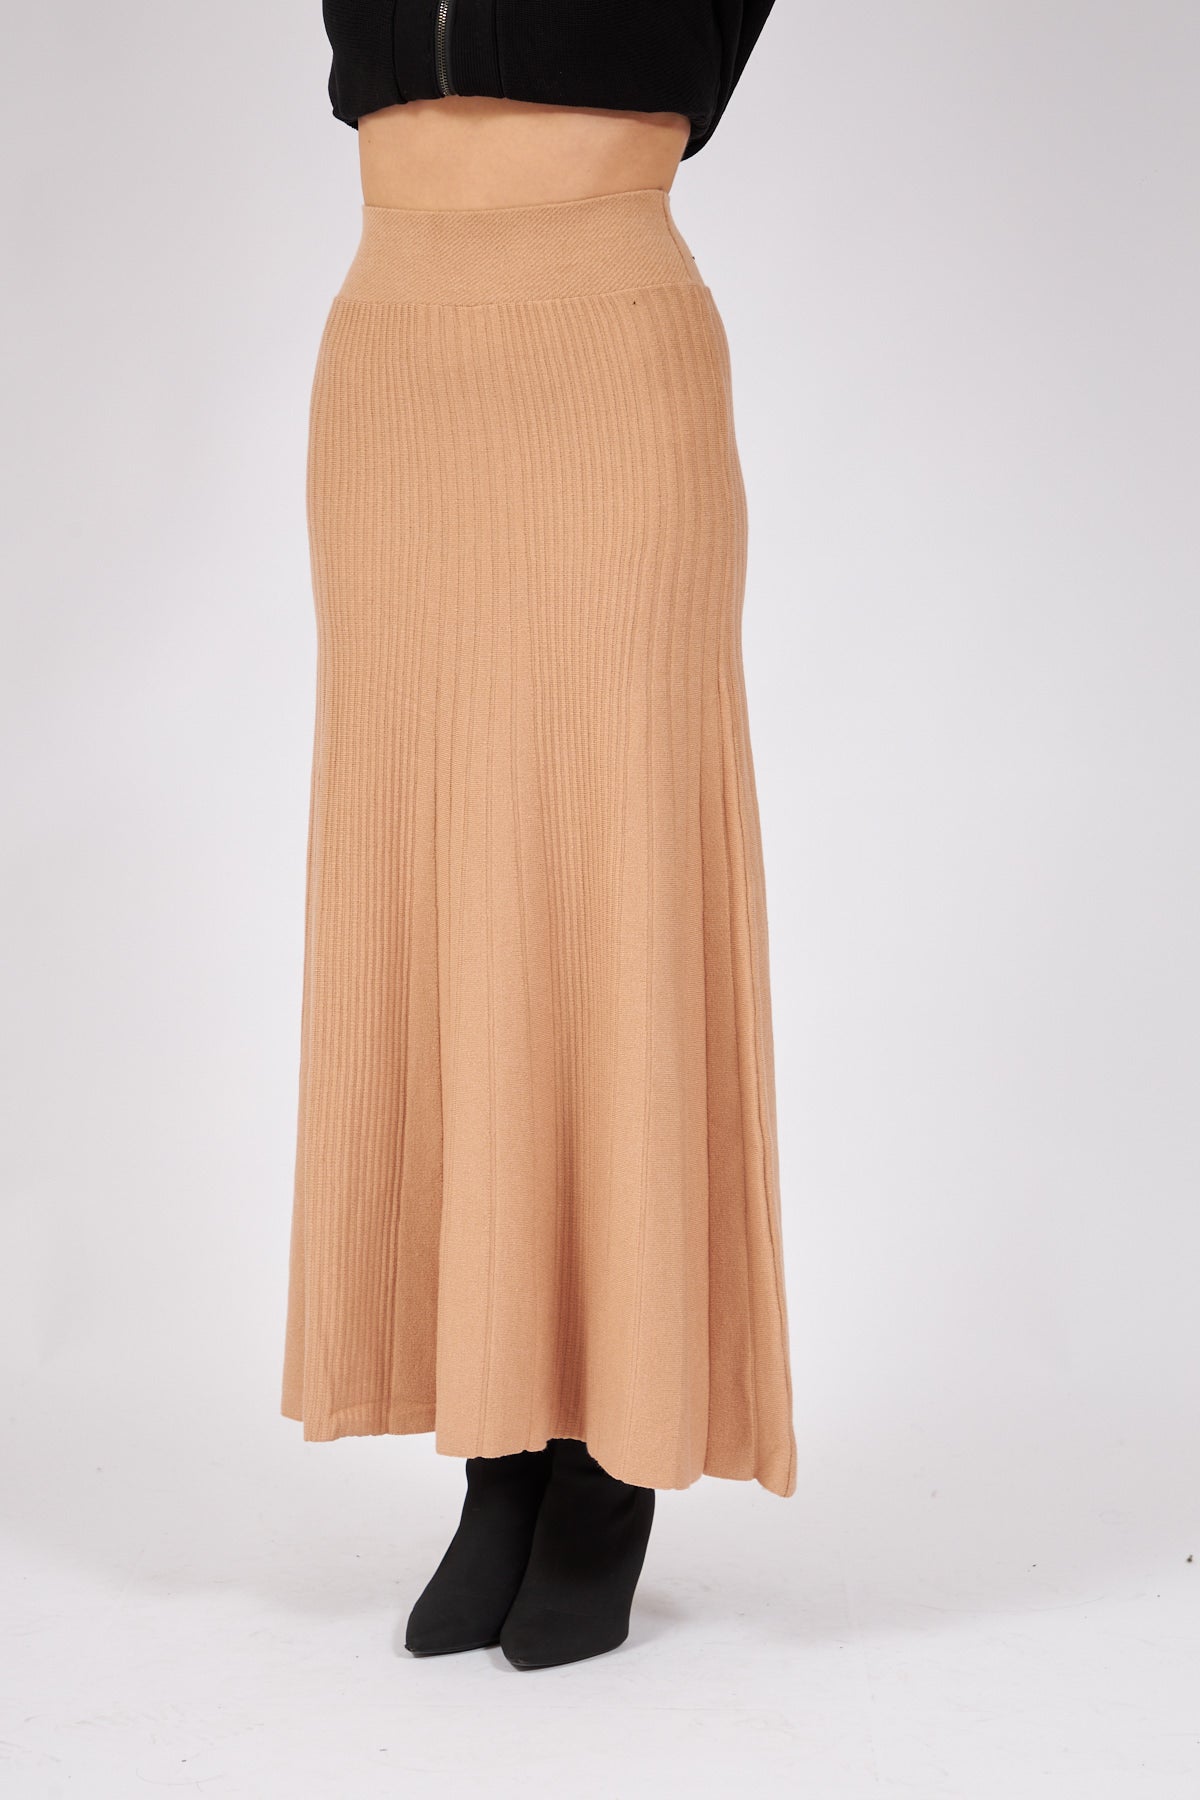 Camel Thick Corduroy Knit Skirt - Lebbse